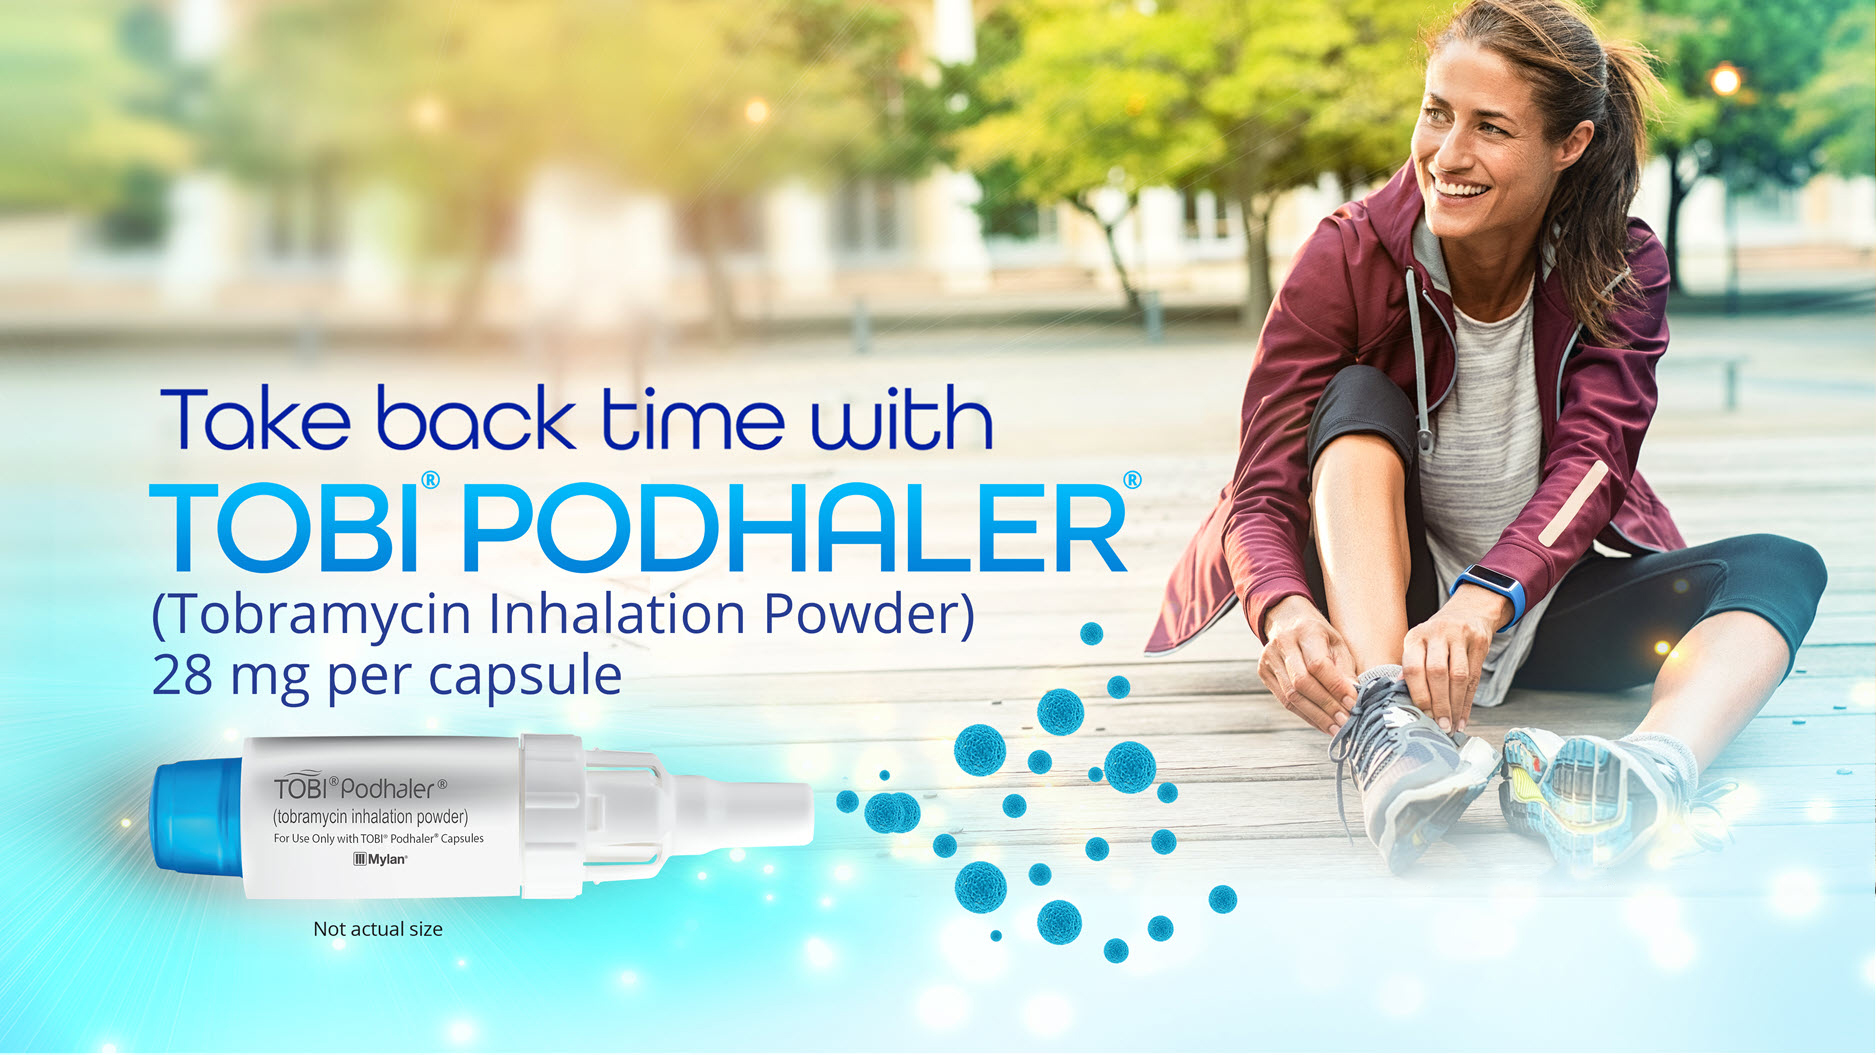 Take back time with TOBI PODHALER (Tobramycin Inhalation Powder) 28 mg per capsule